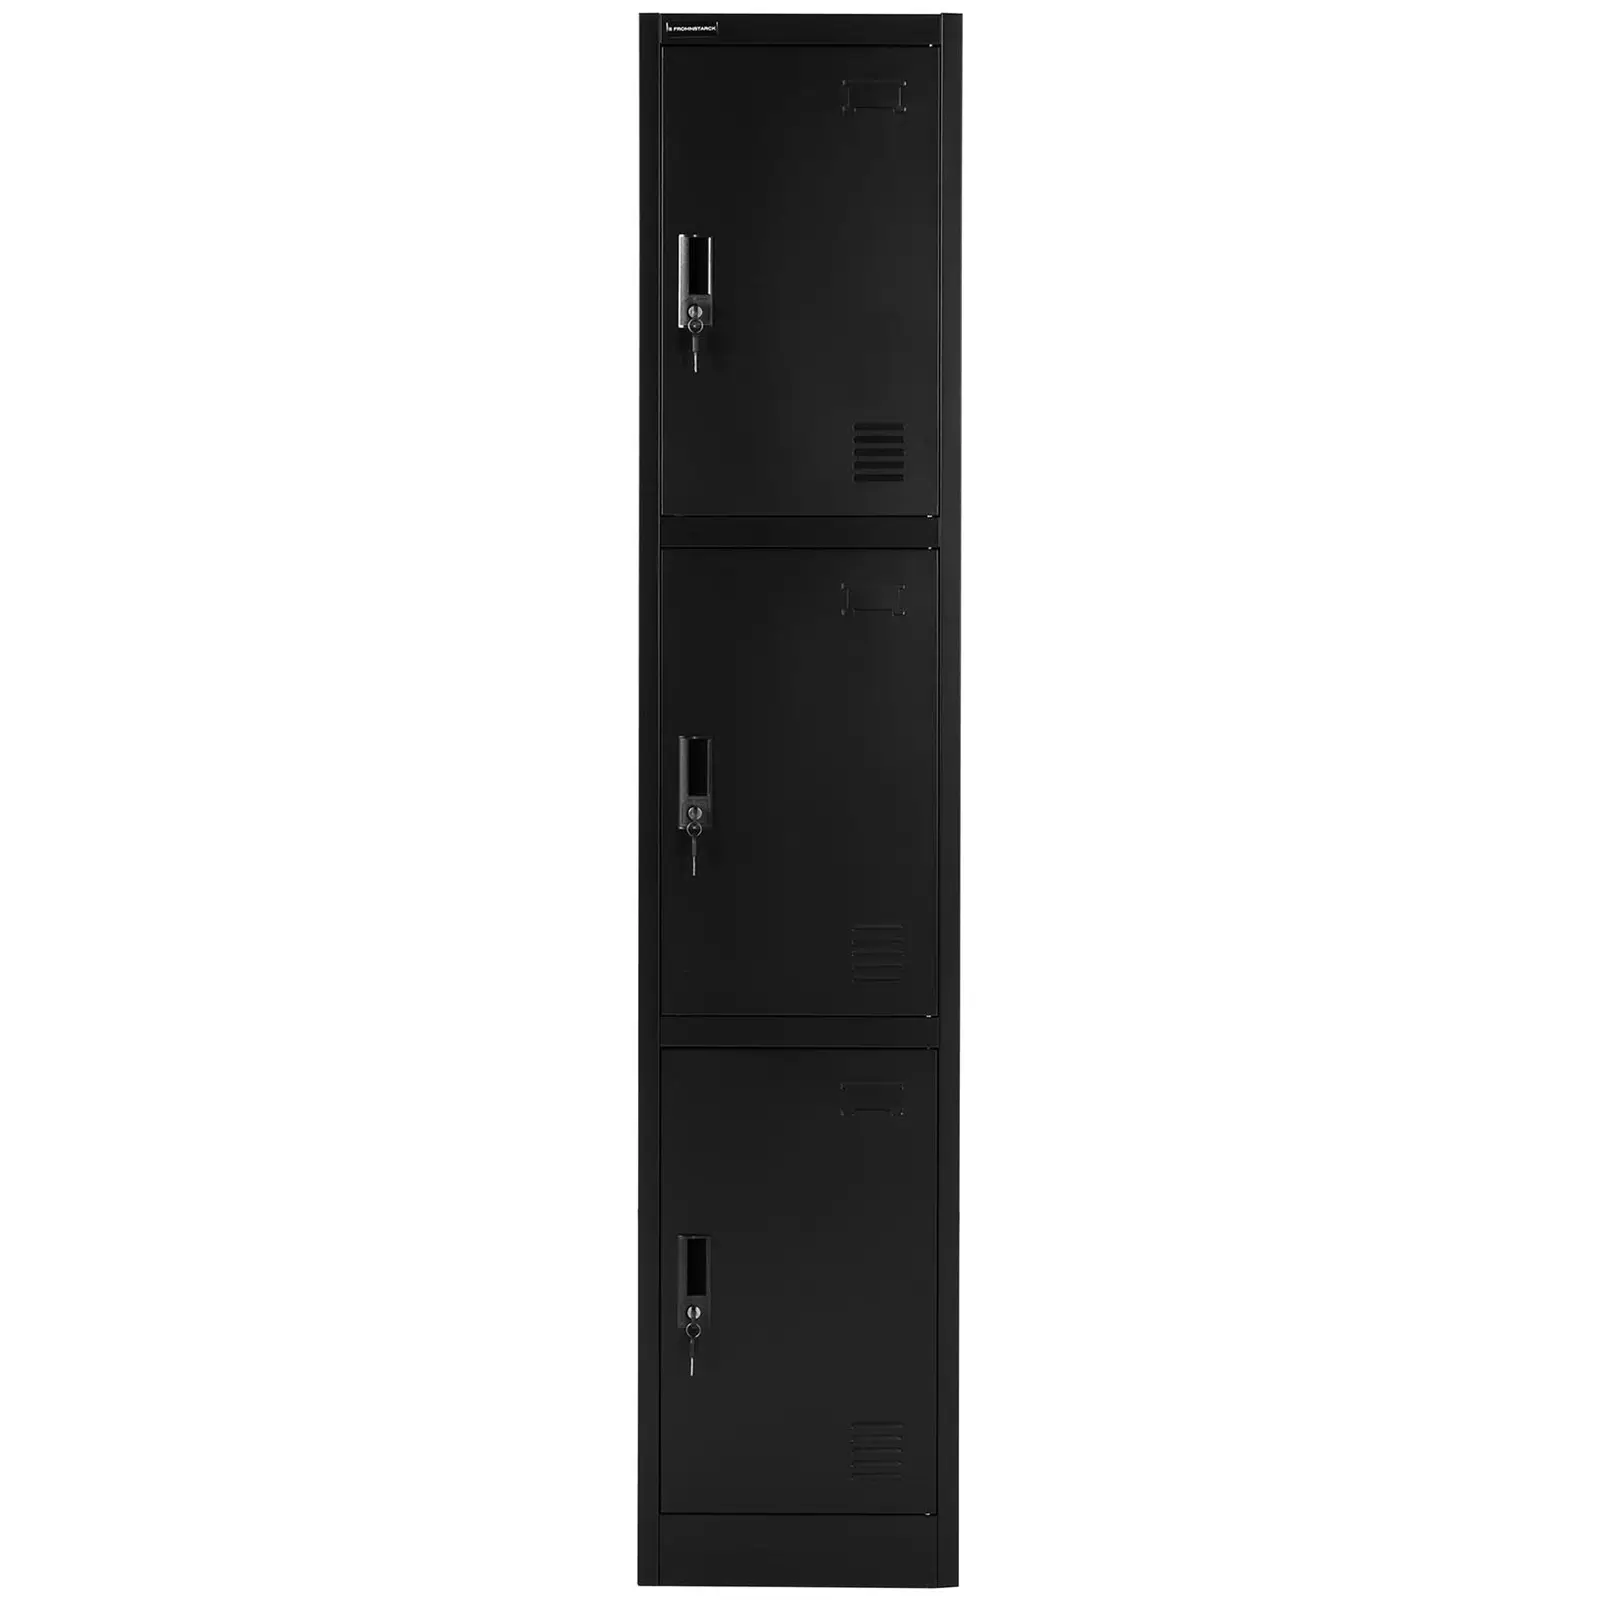 Locker - 3 shelves - lockable -60 kg